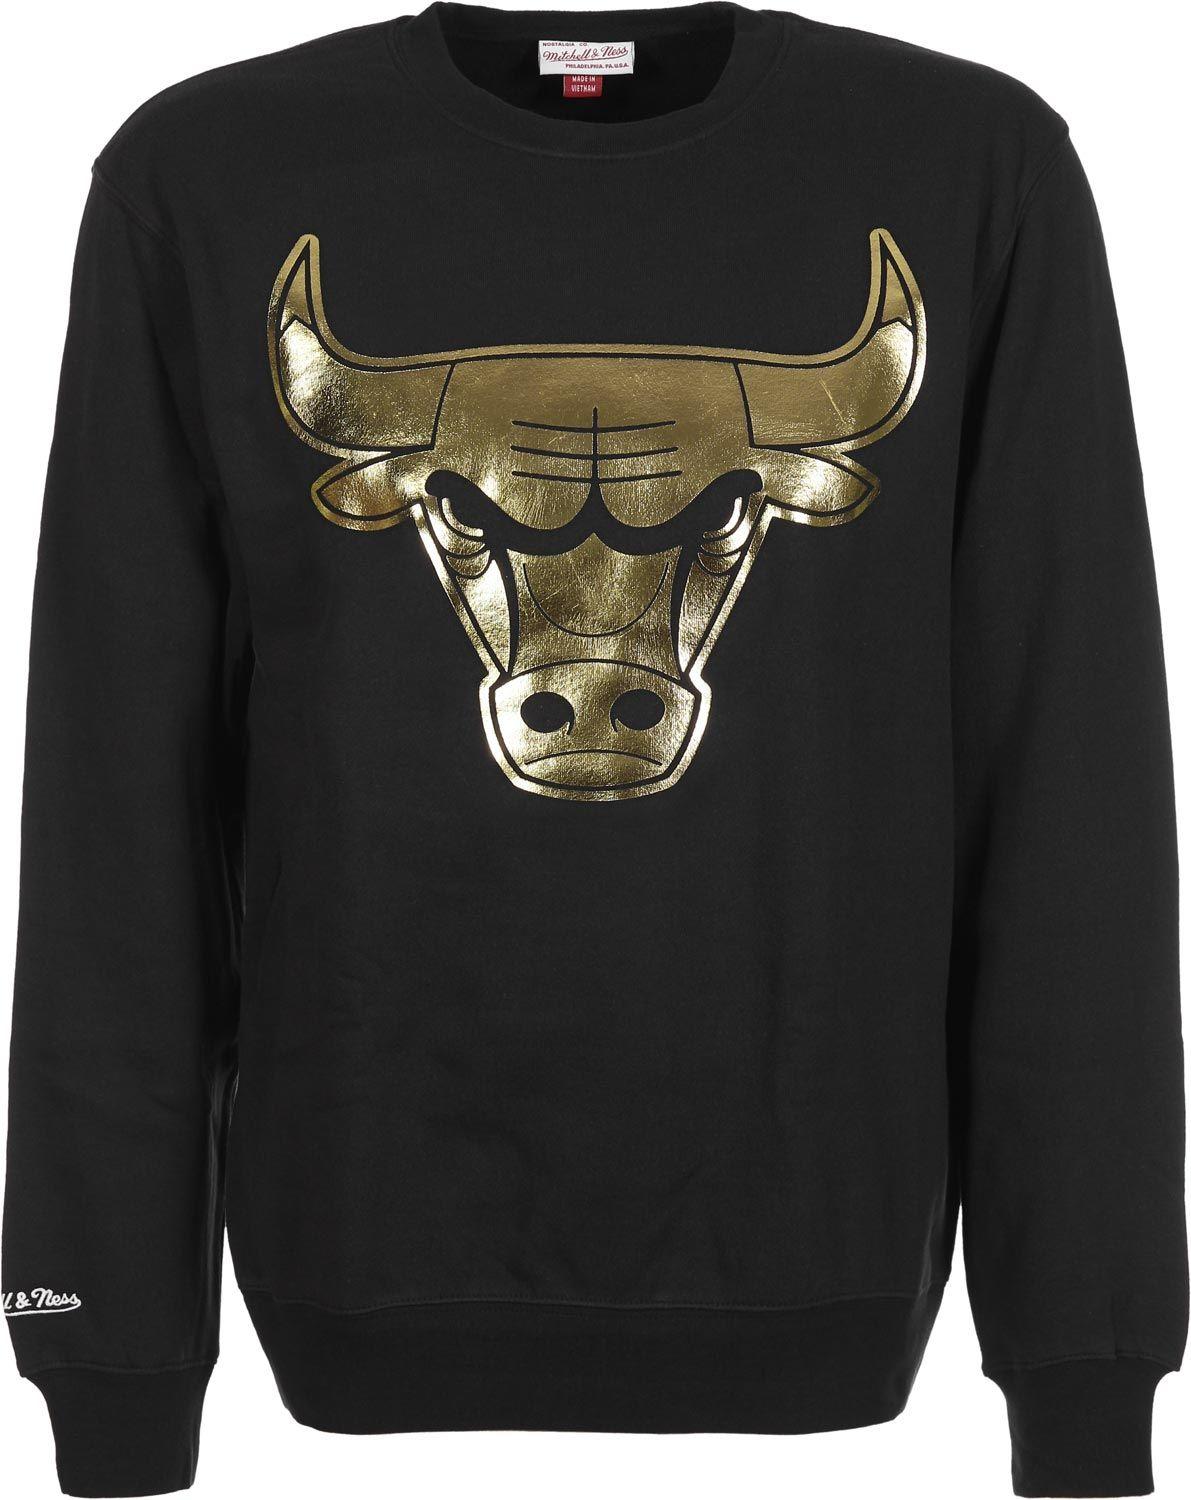 Black and Gold Bulls Logo - LogoDix